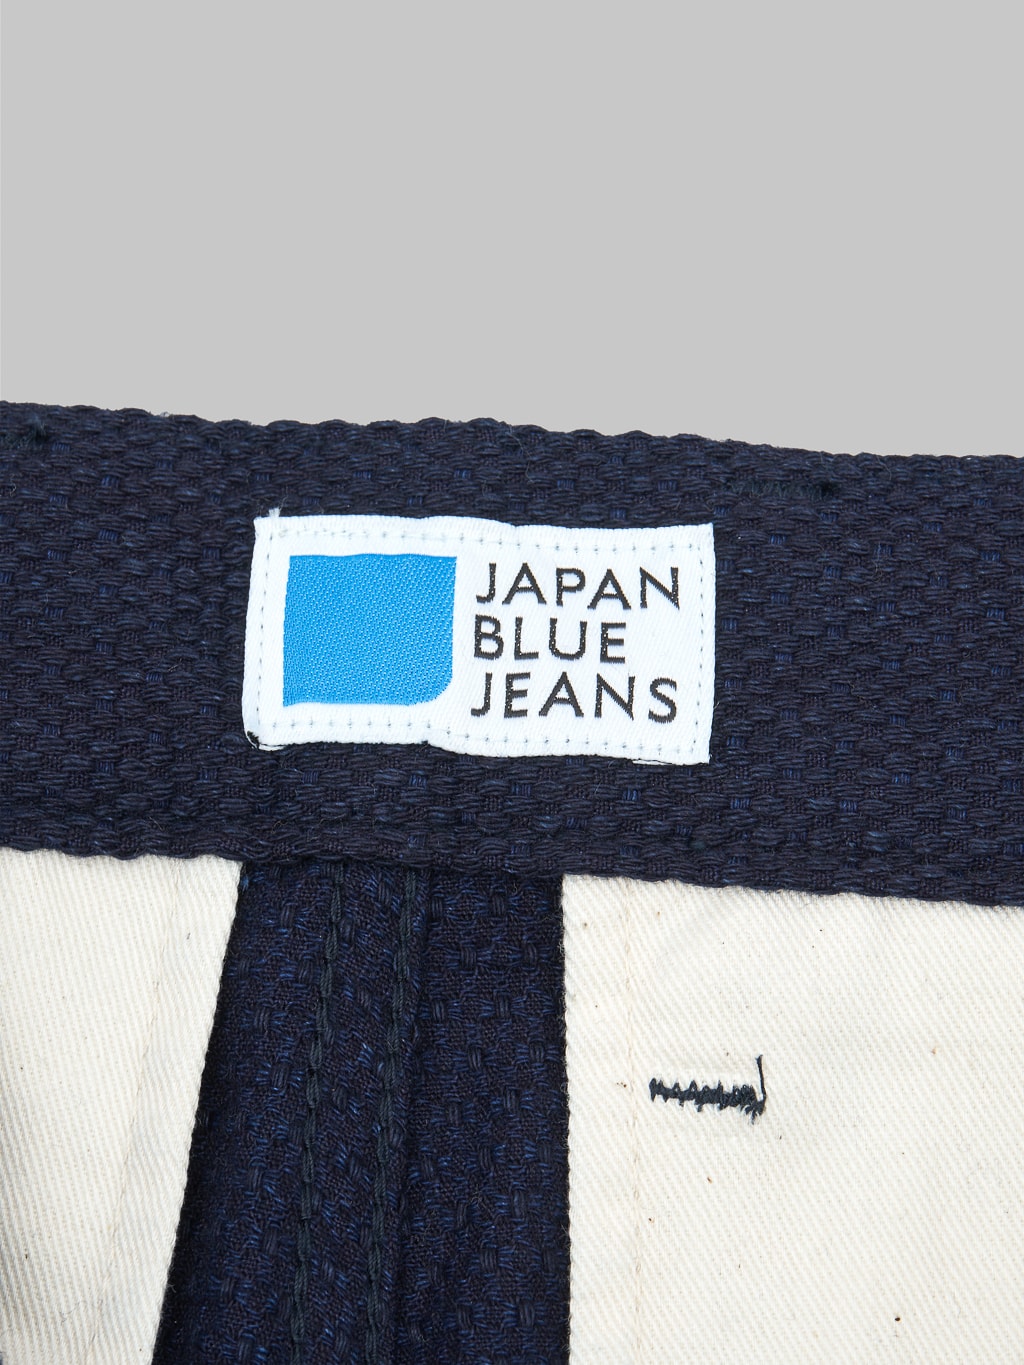 Japan Blue sashiko indigo jacquard shorts interior label